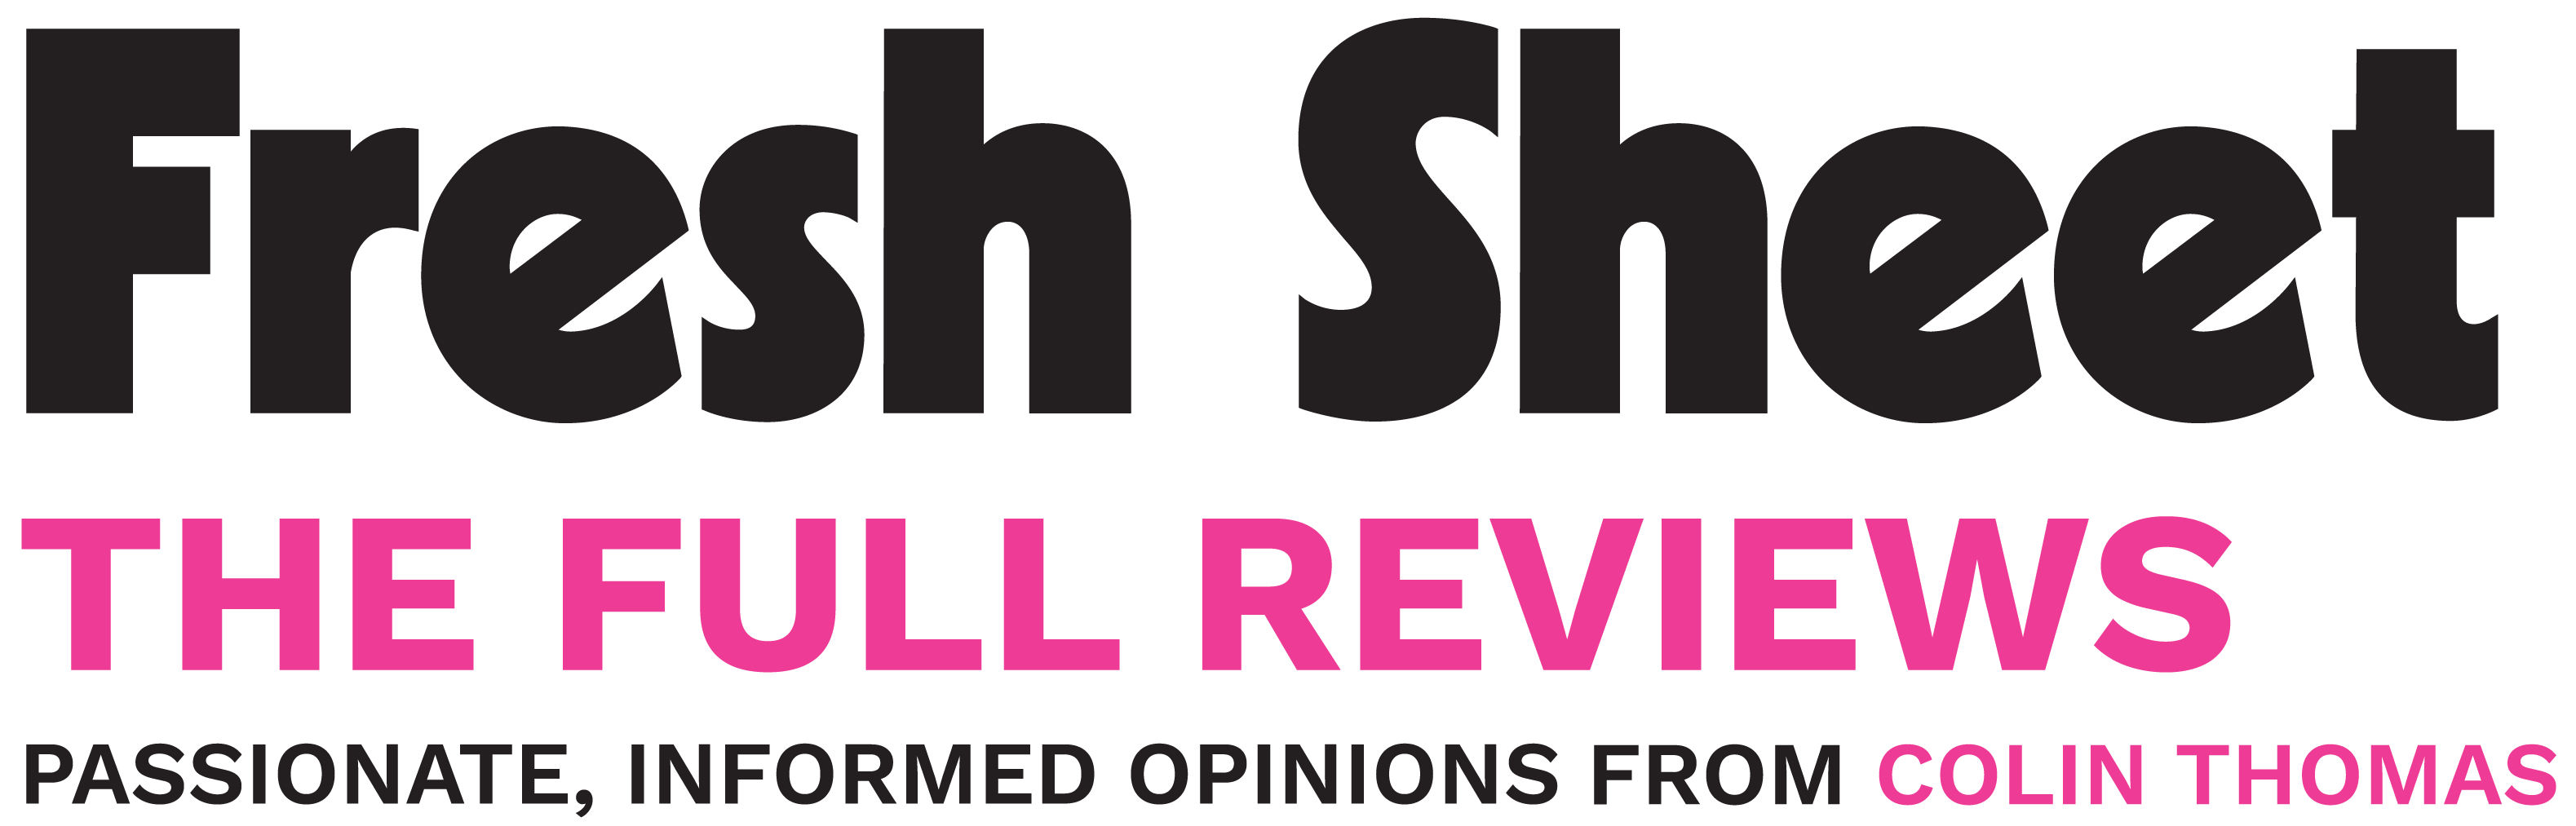 Fresh Sheet Full Reviews logo